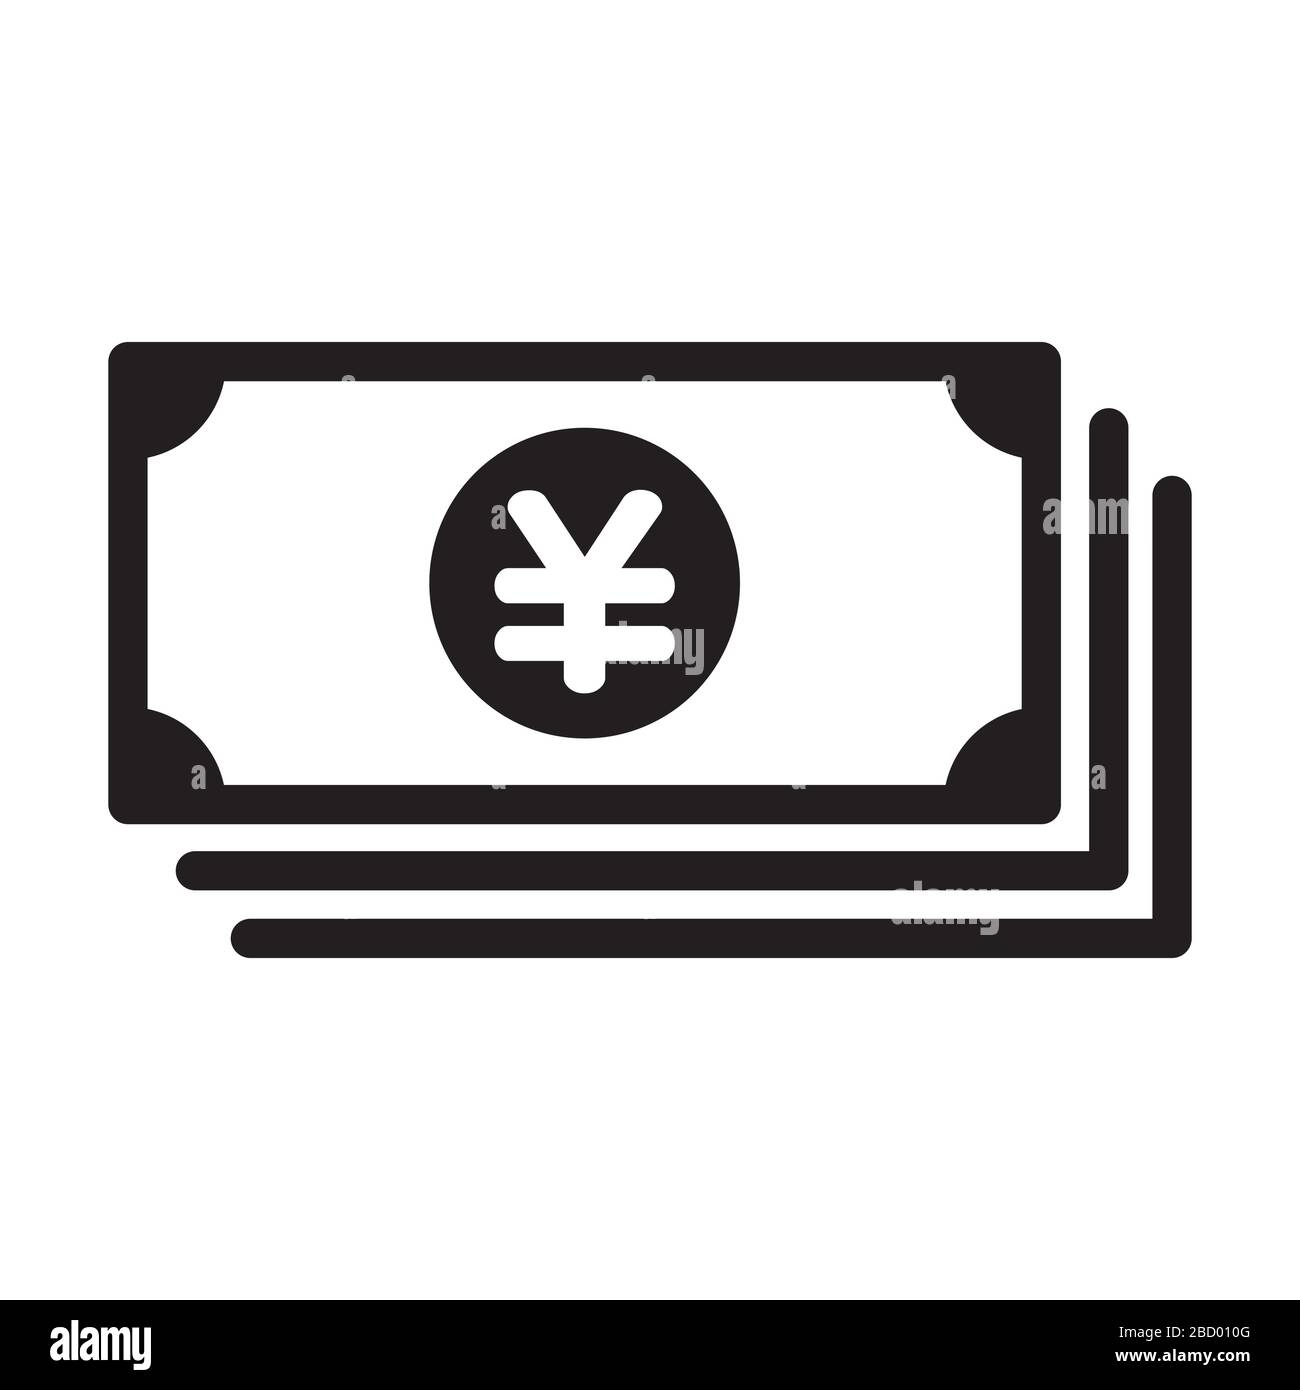 bill / wad of money / cash icon (yen / JPY) Stock Vector